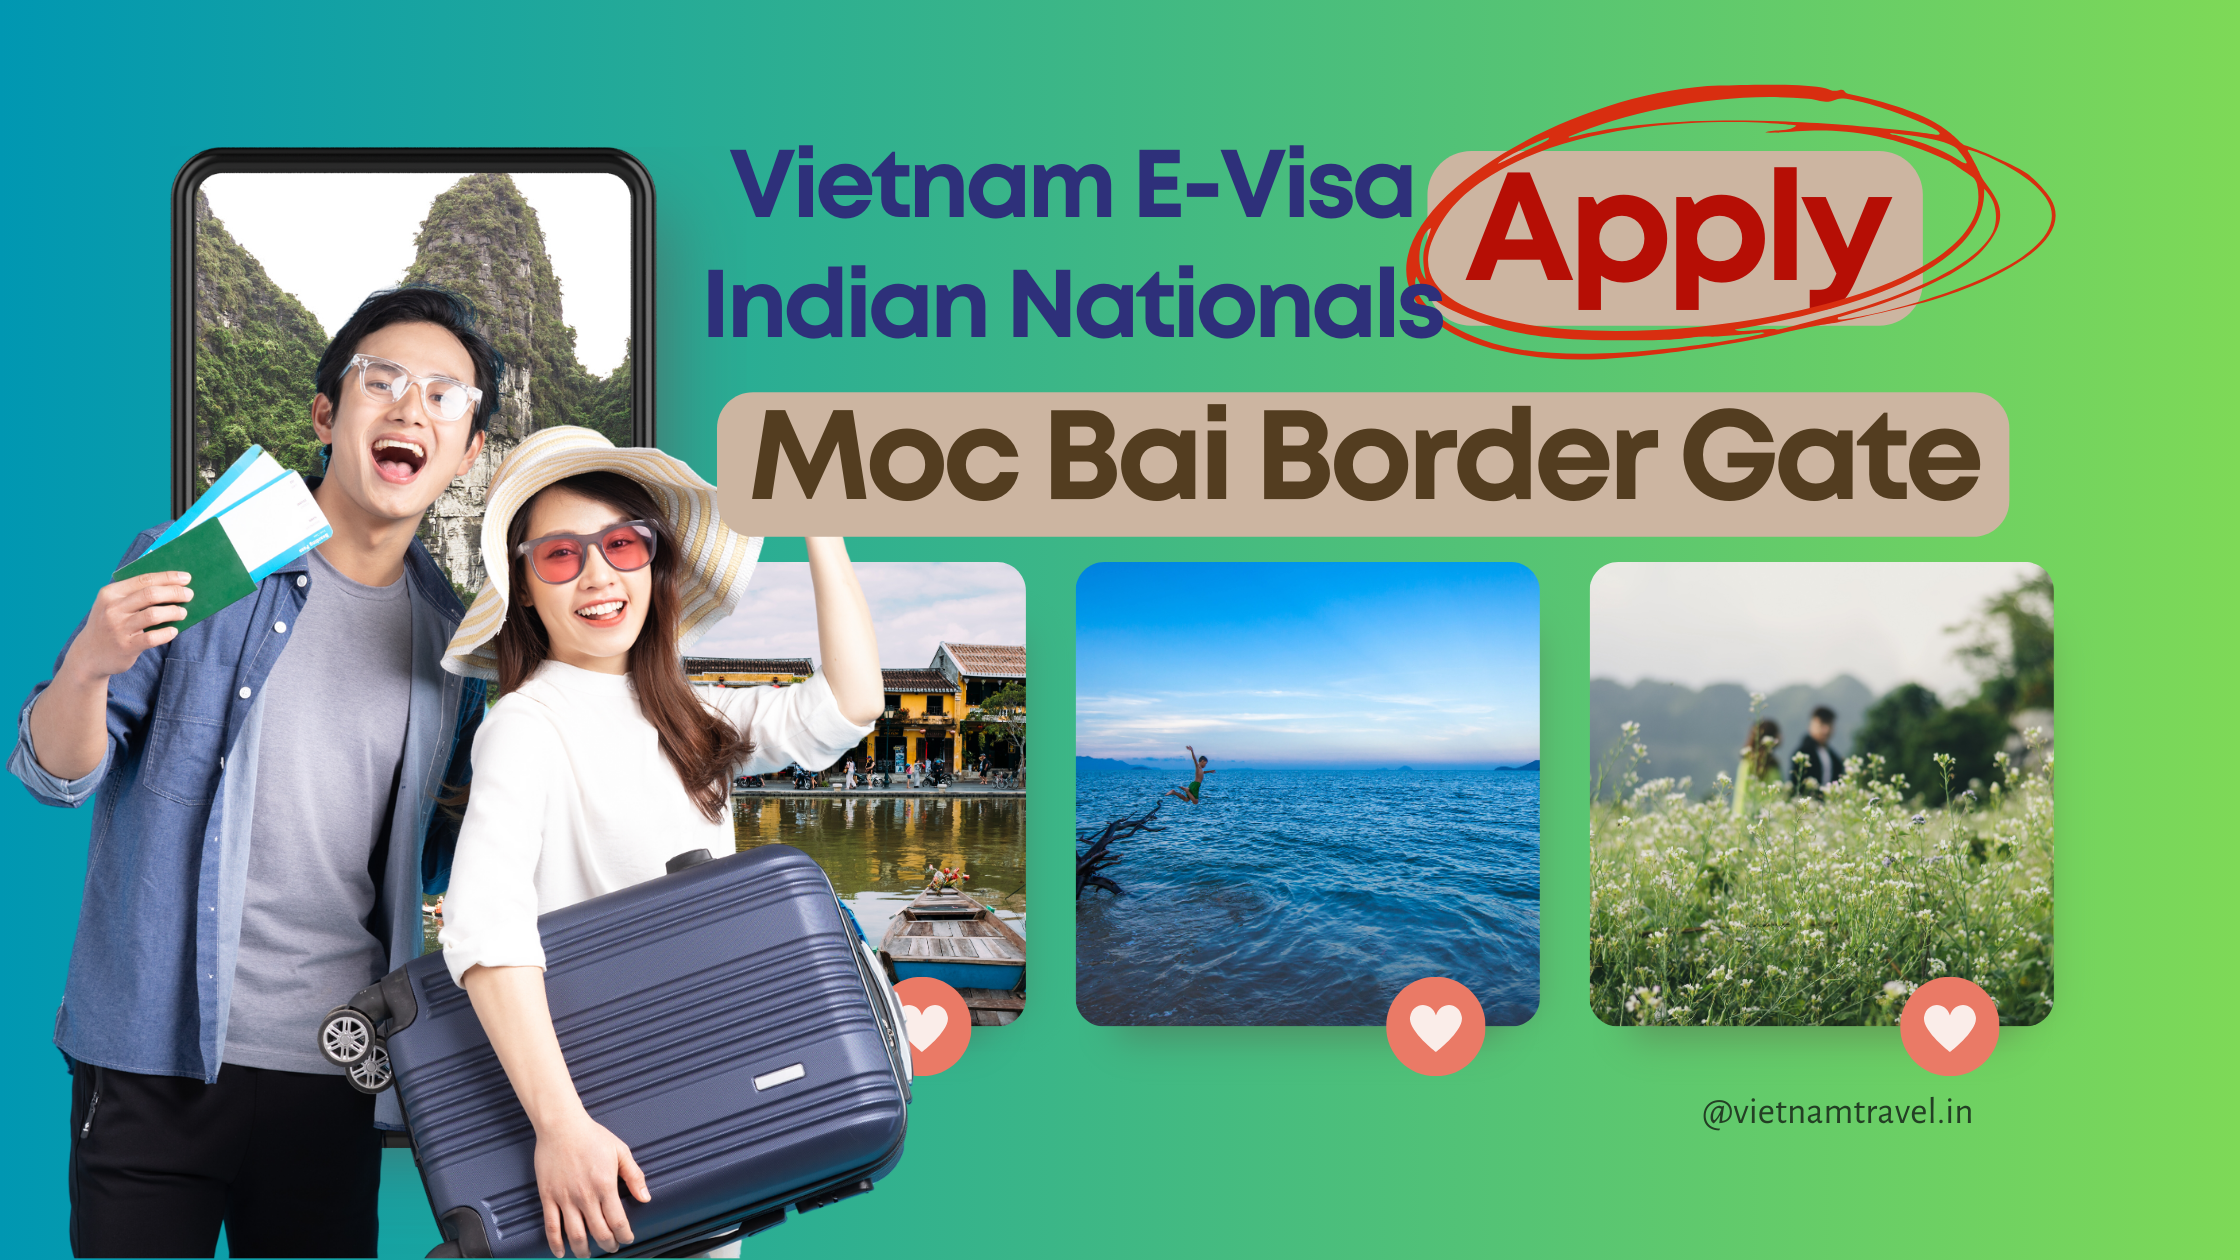 Fast-Track-Applying-for-Vietnam-E-Visa-for-Indian-Citizens-to-Moc-Bai-Border-Gate